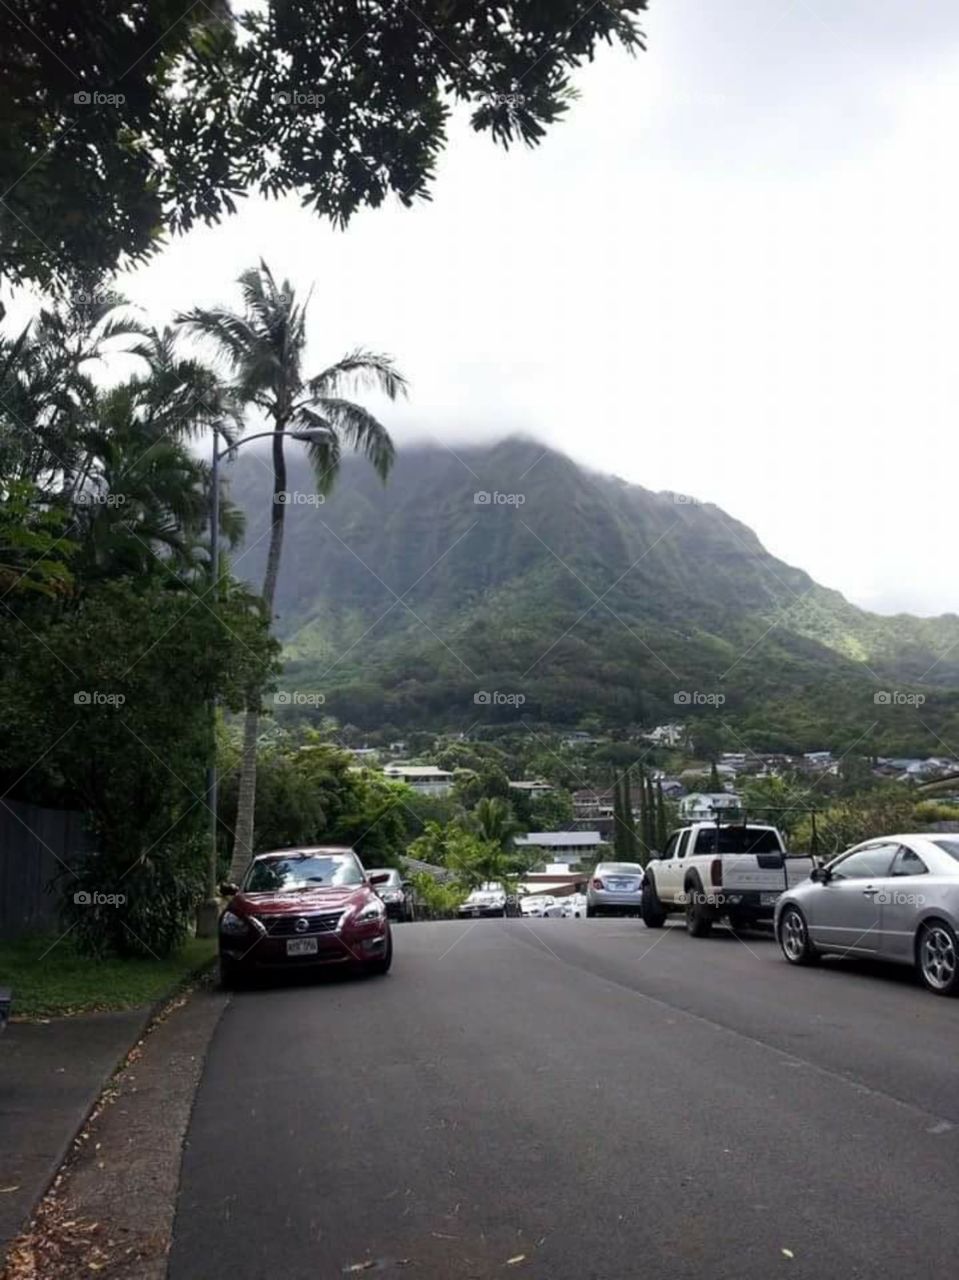 Amazing mountain view in Hawaii